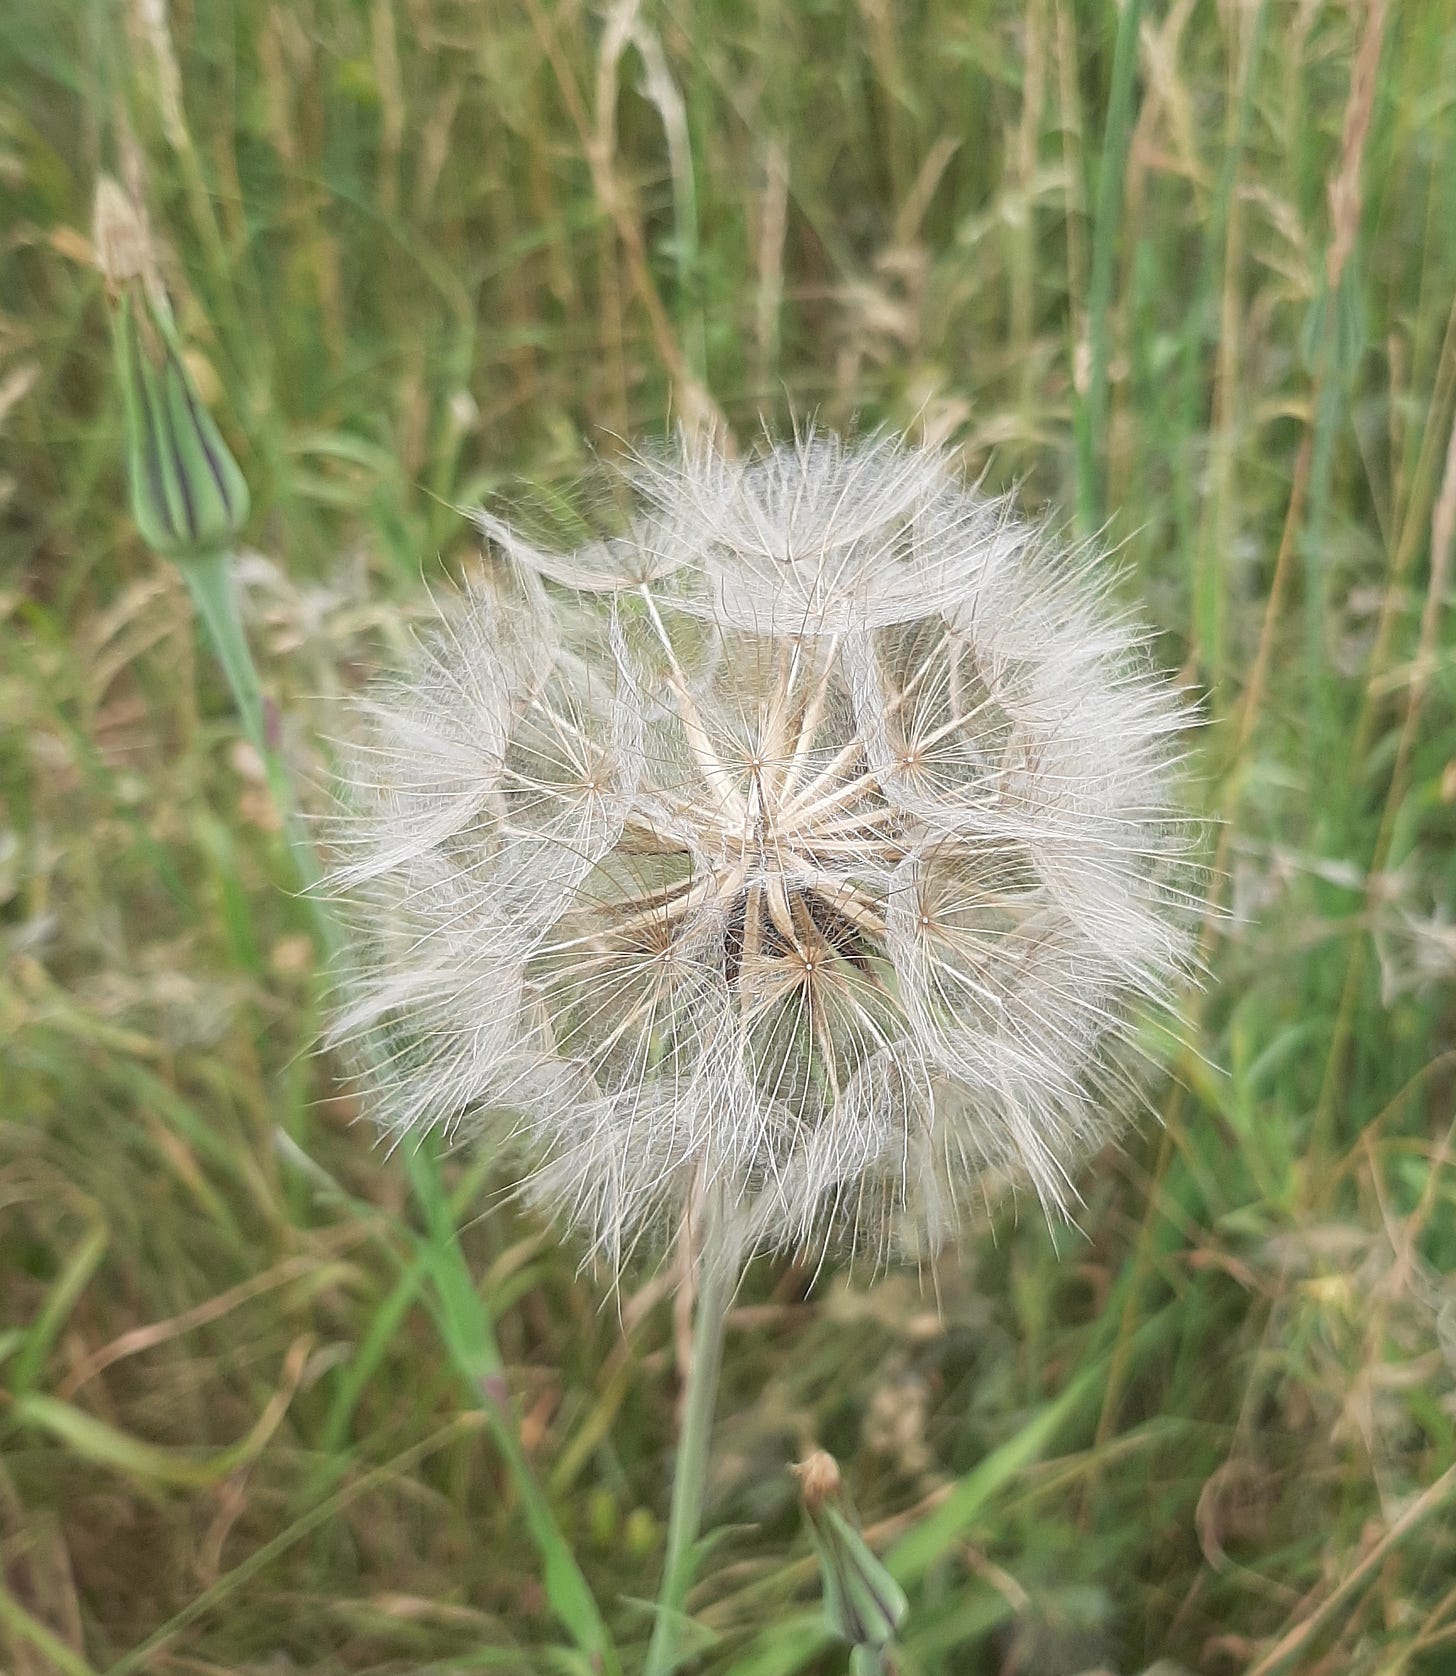 A dandelion seed head